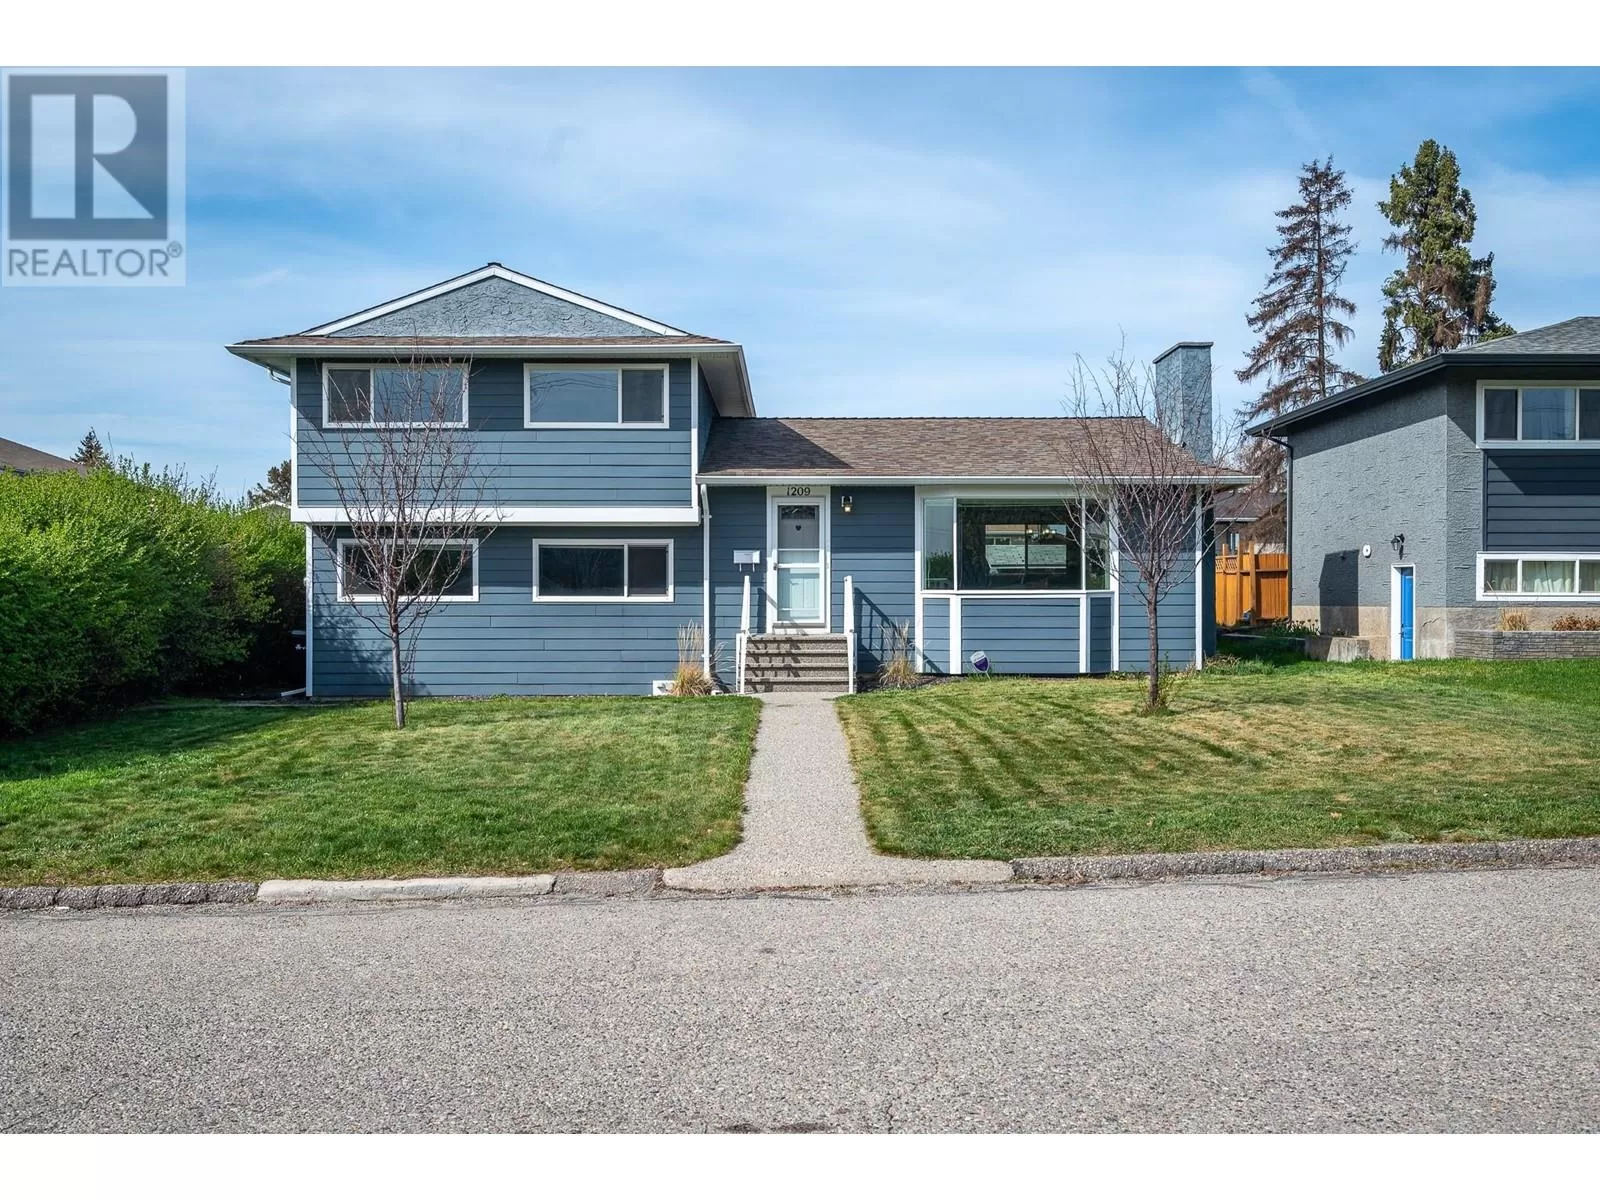 House for rent: 1209 36 Avenue, Vernon, British Columbia V1T 2V2